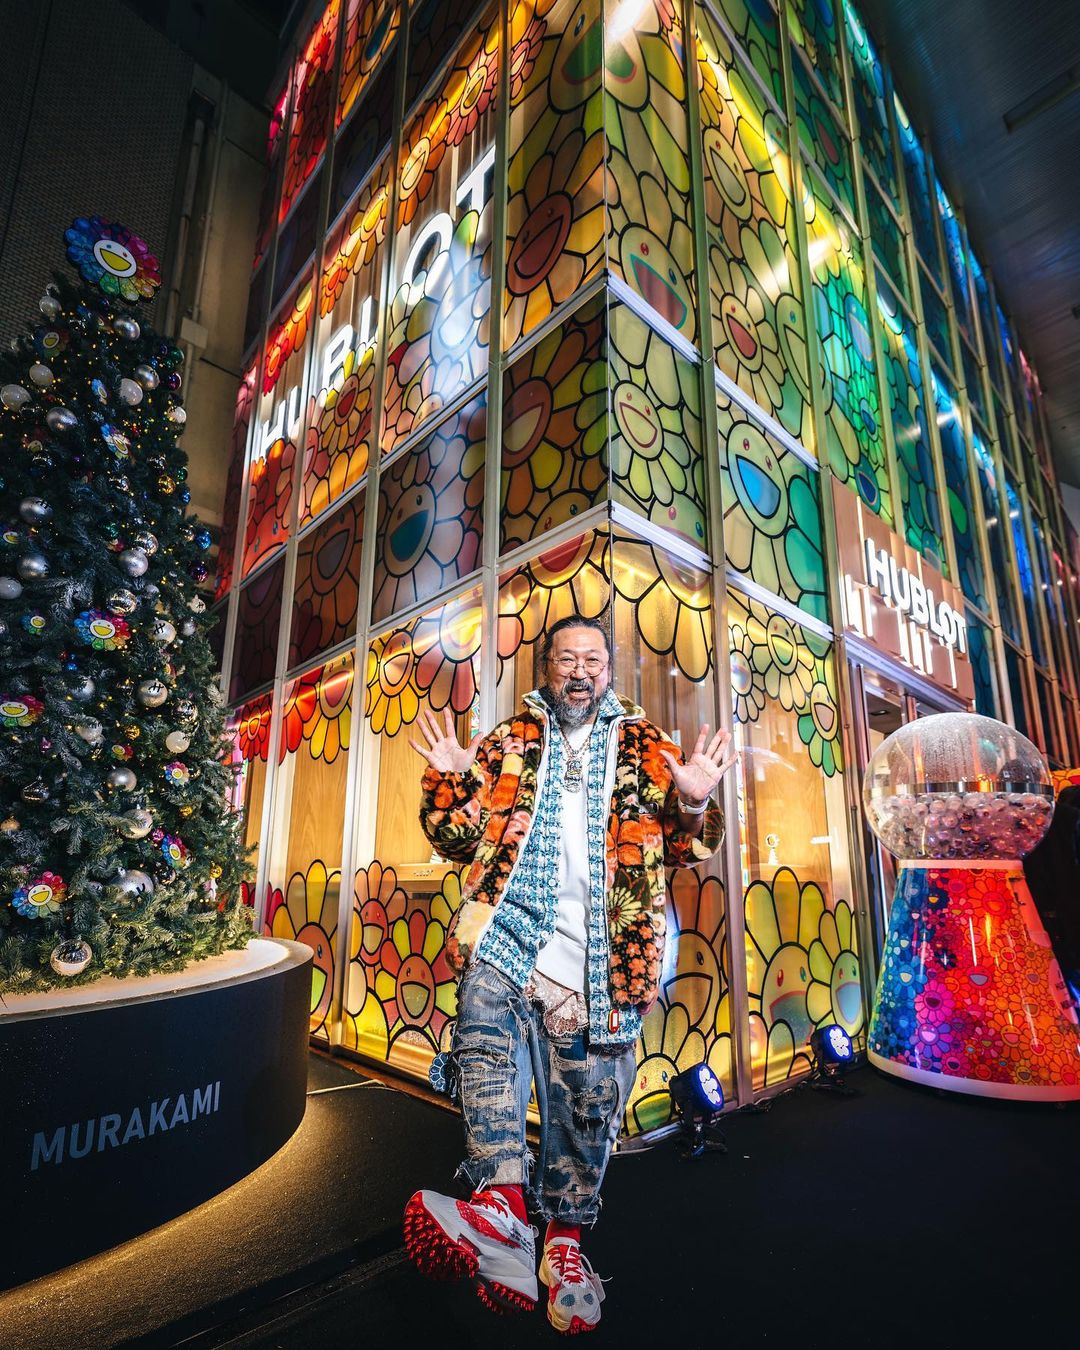 Hublot goes rainbow bright with Murakami collaboration